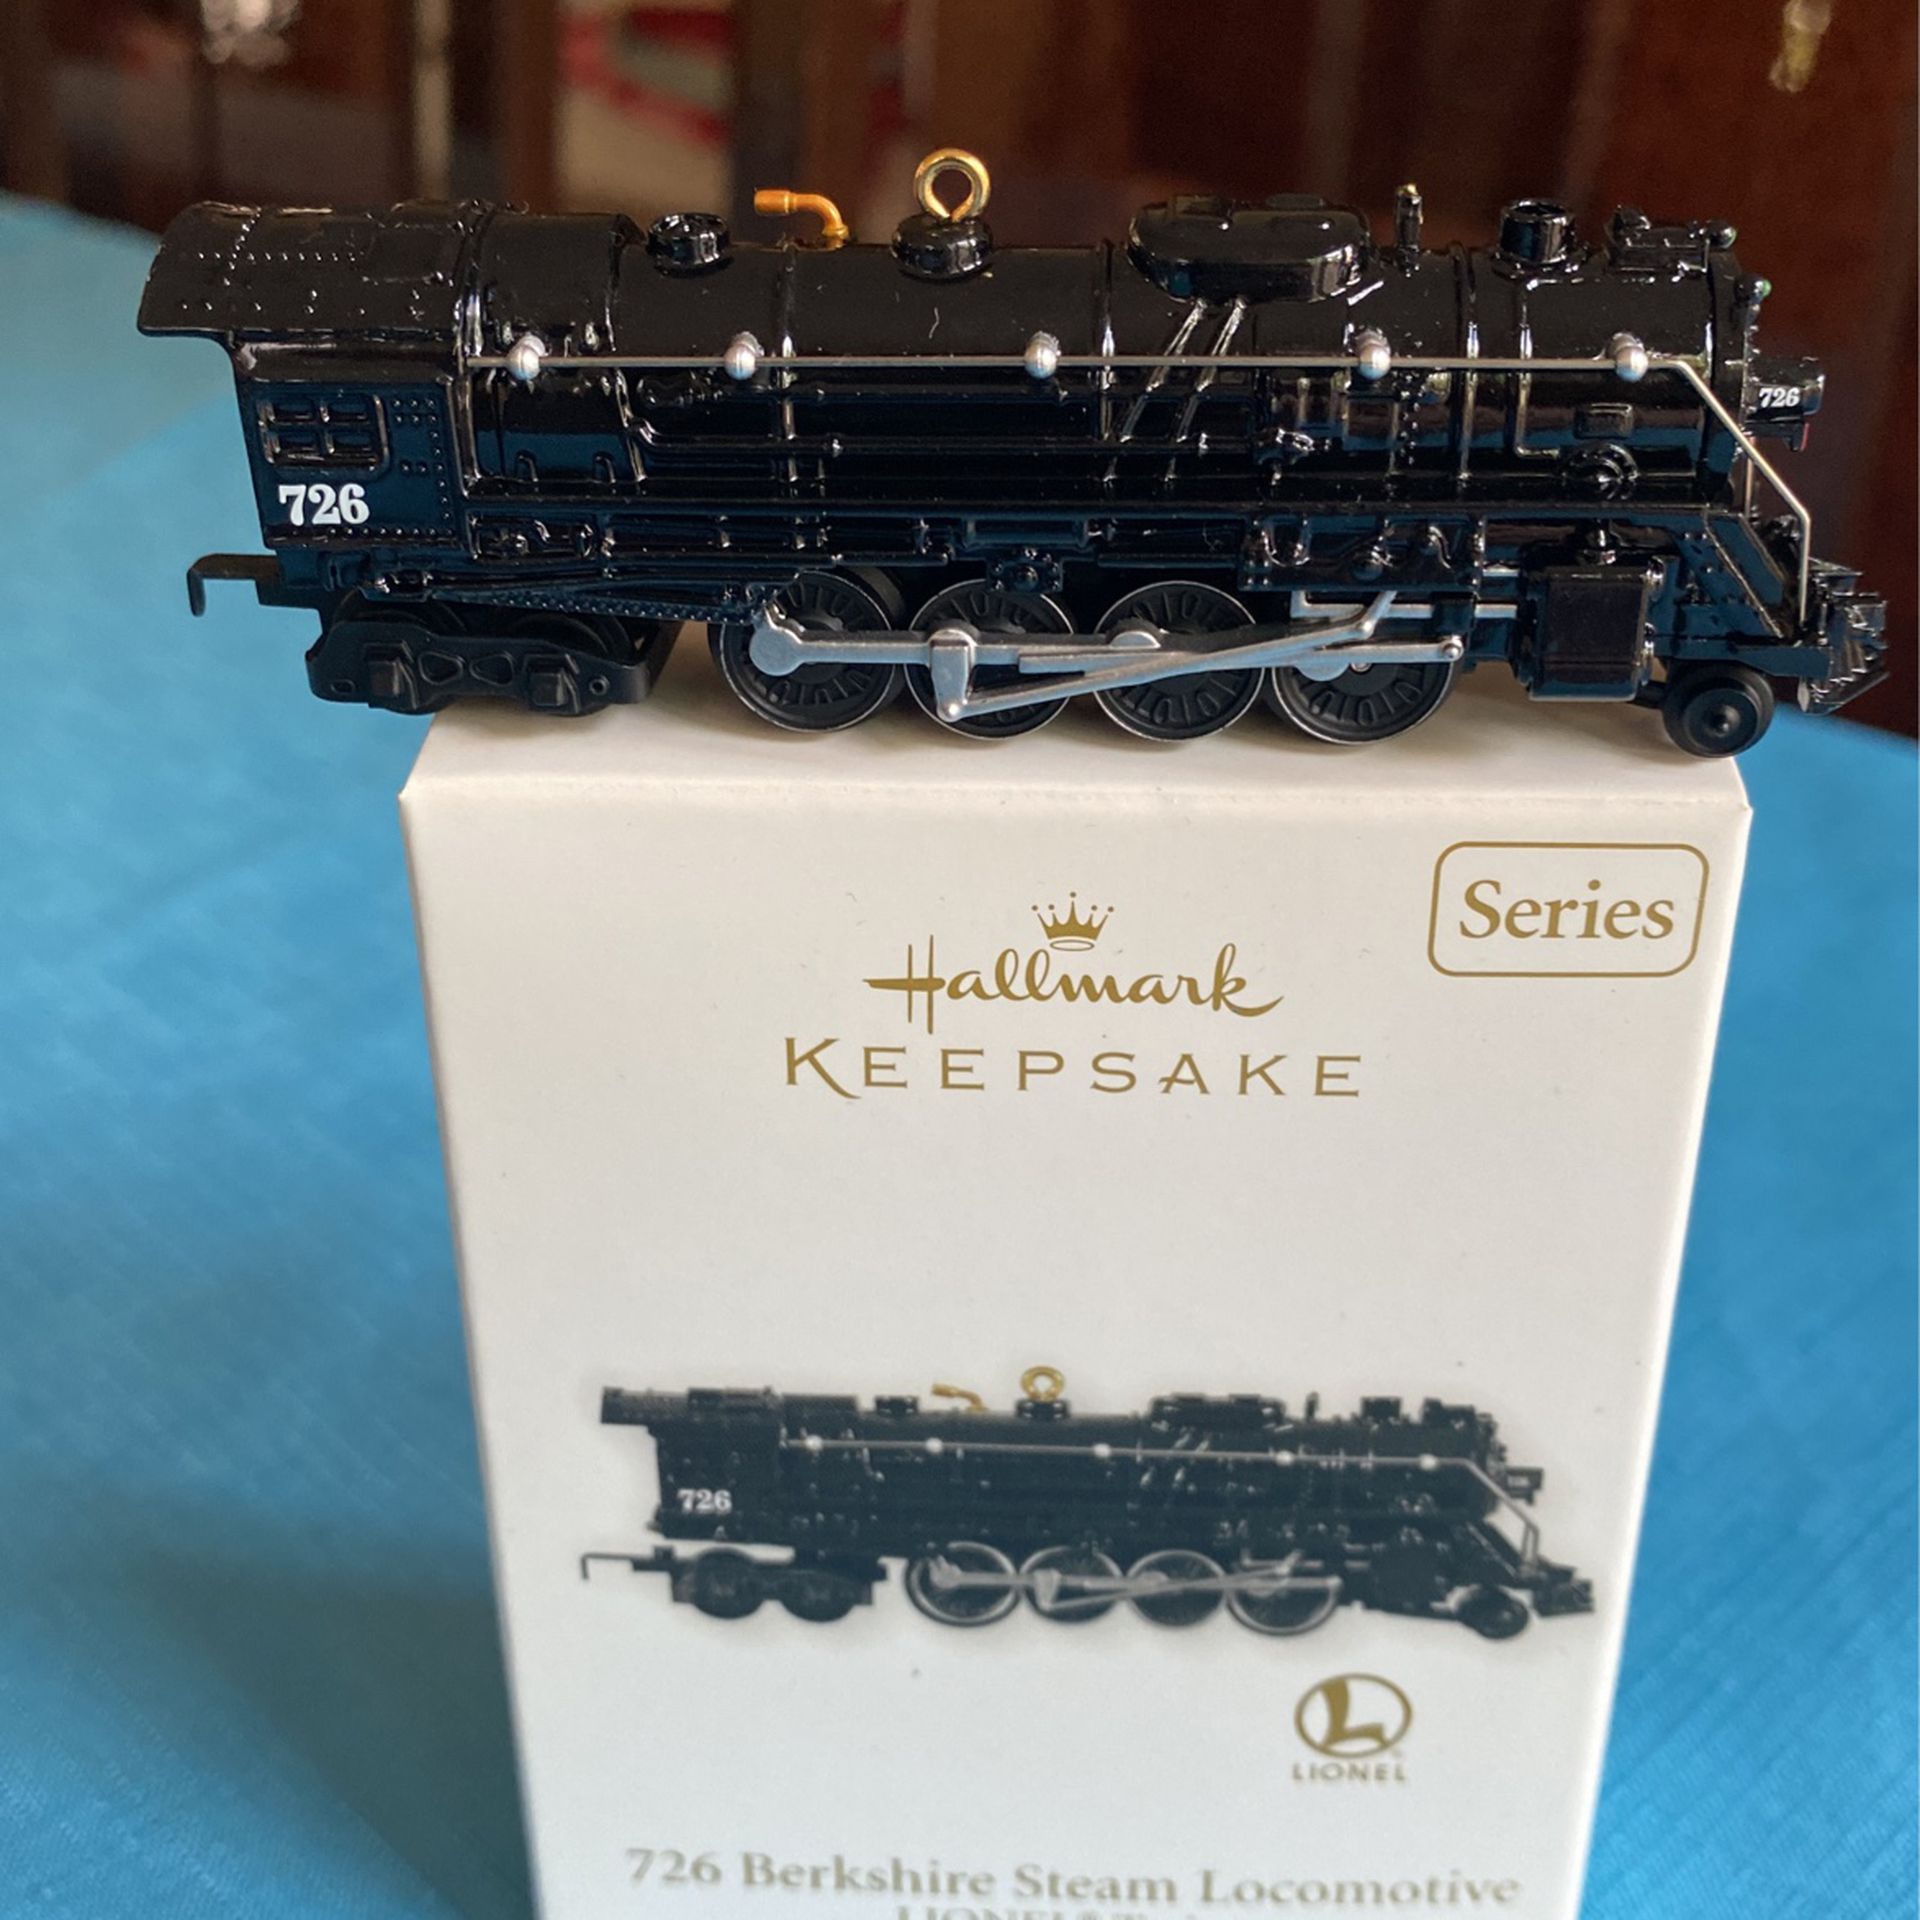 Hallmark keepsake Christmas tree ornament 726 Berkshire steam locomotive Lionell train and crafted metal dated 2011 new in original box